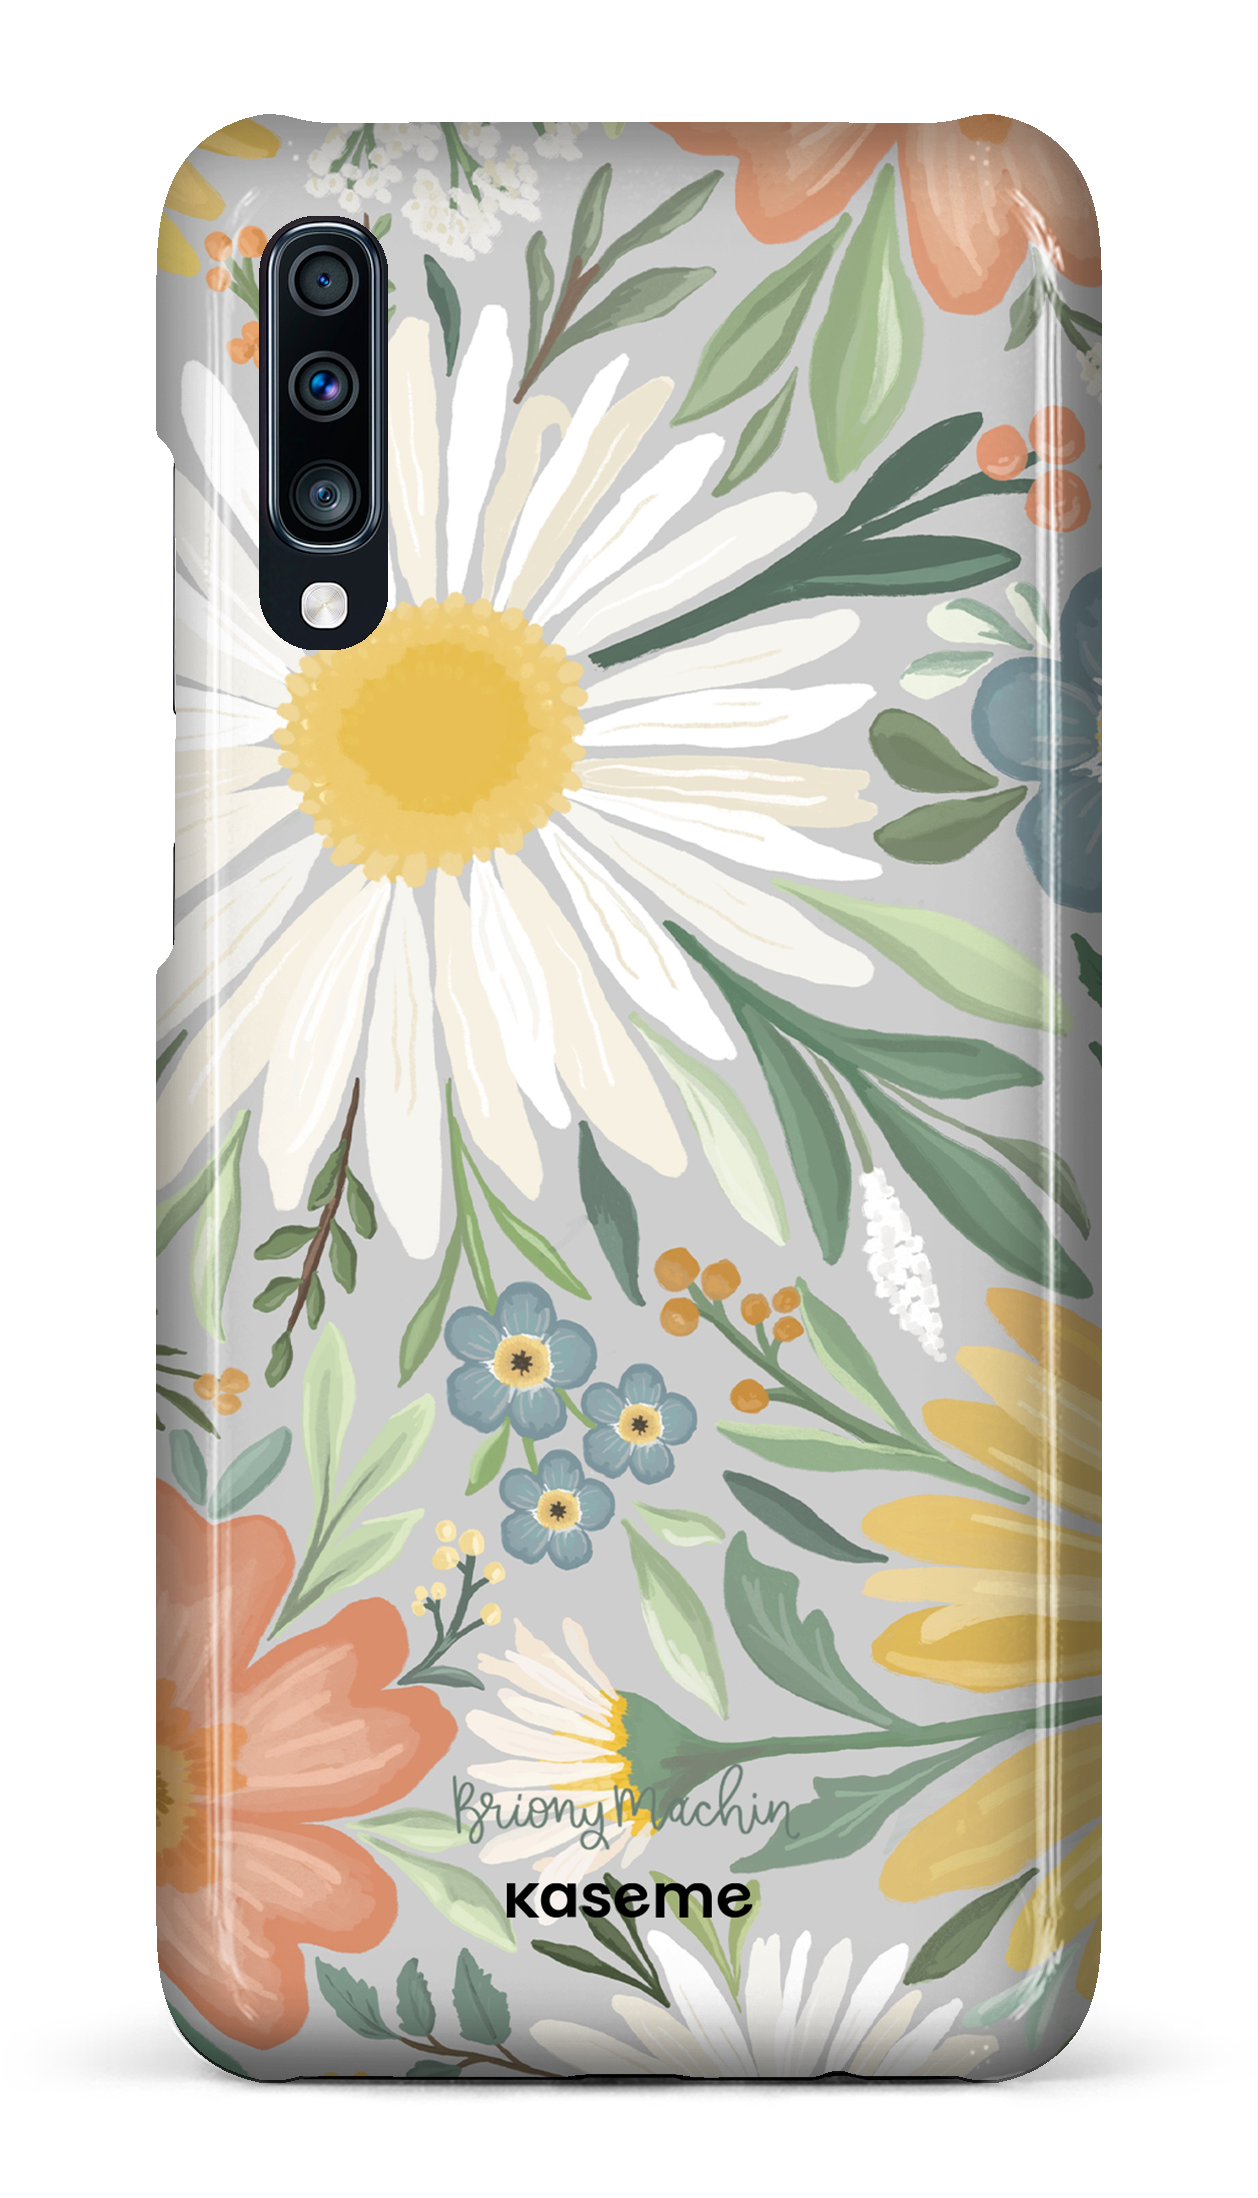 Garden Blooms by Briony Machin - Galaxy A70